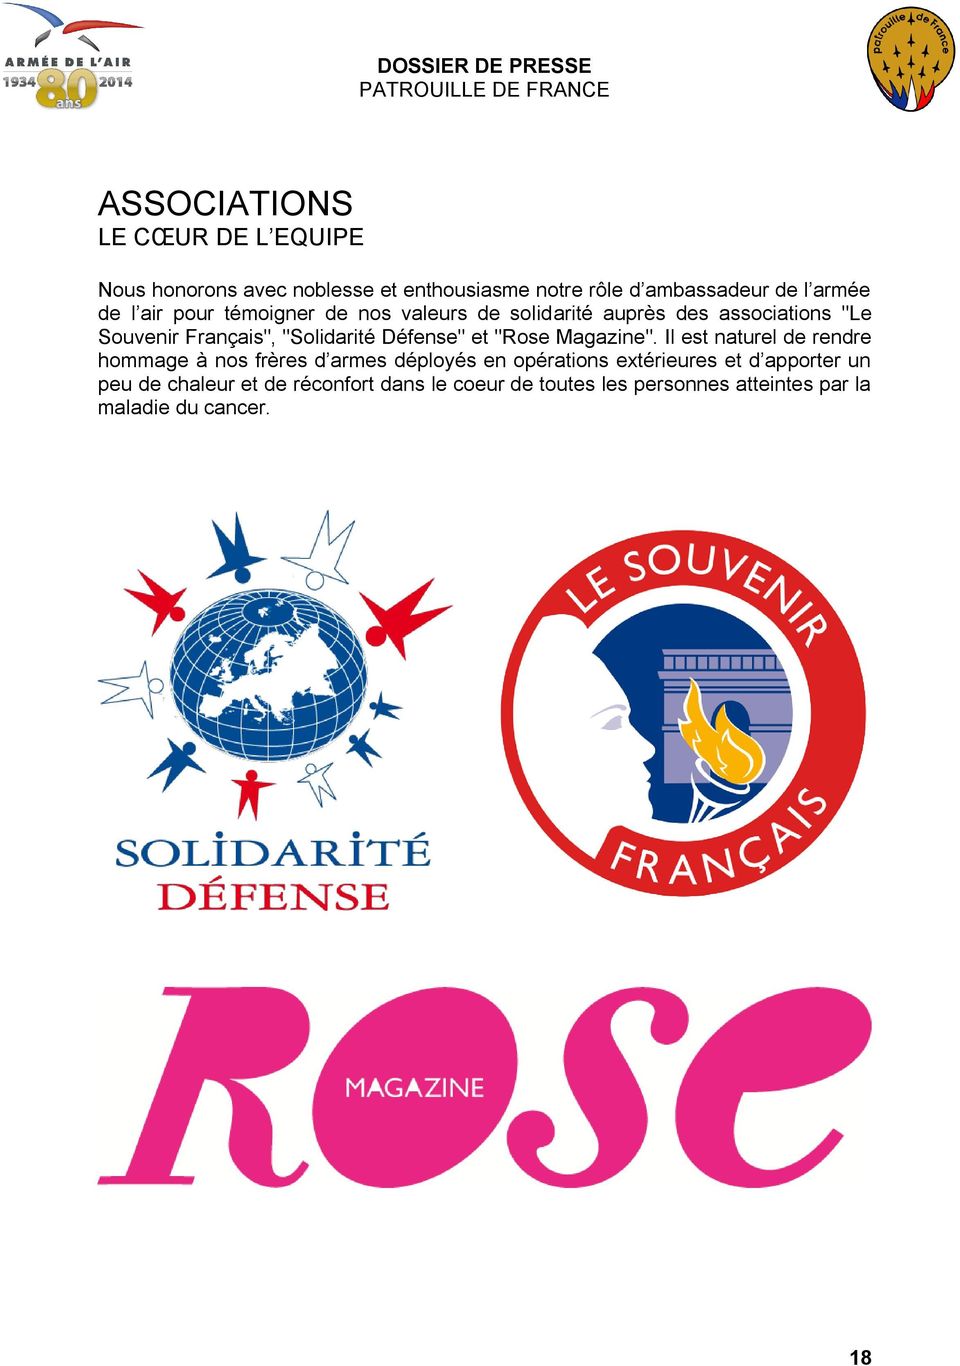 Défense" et "Rose Magazine".